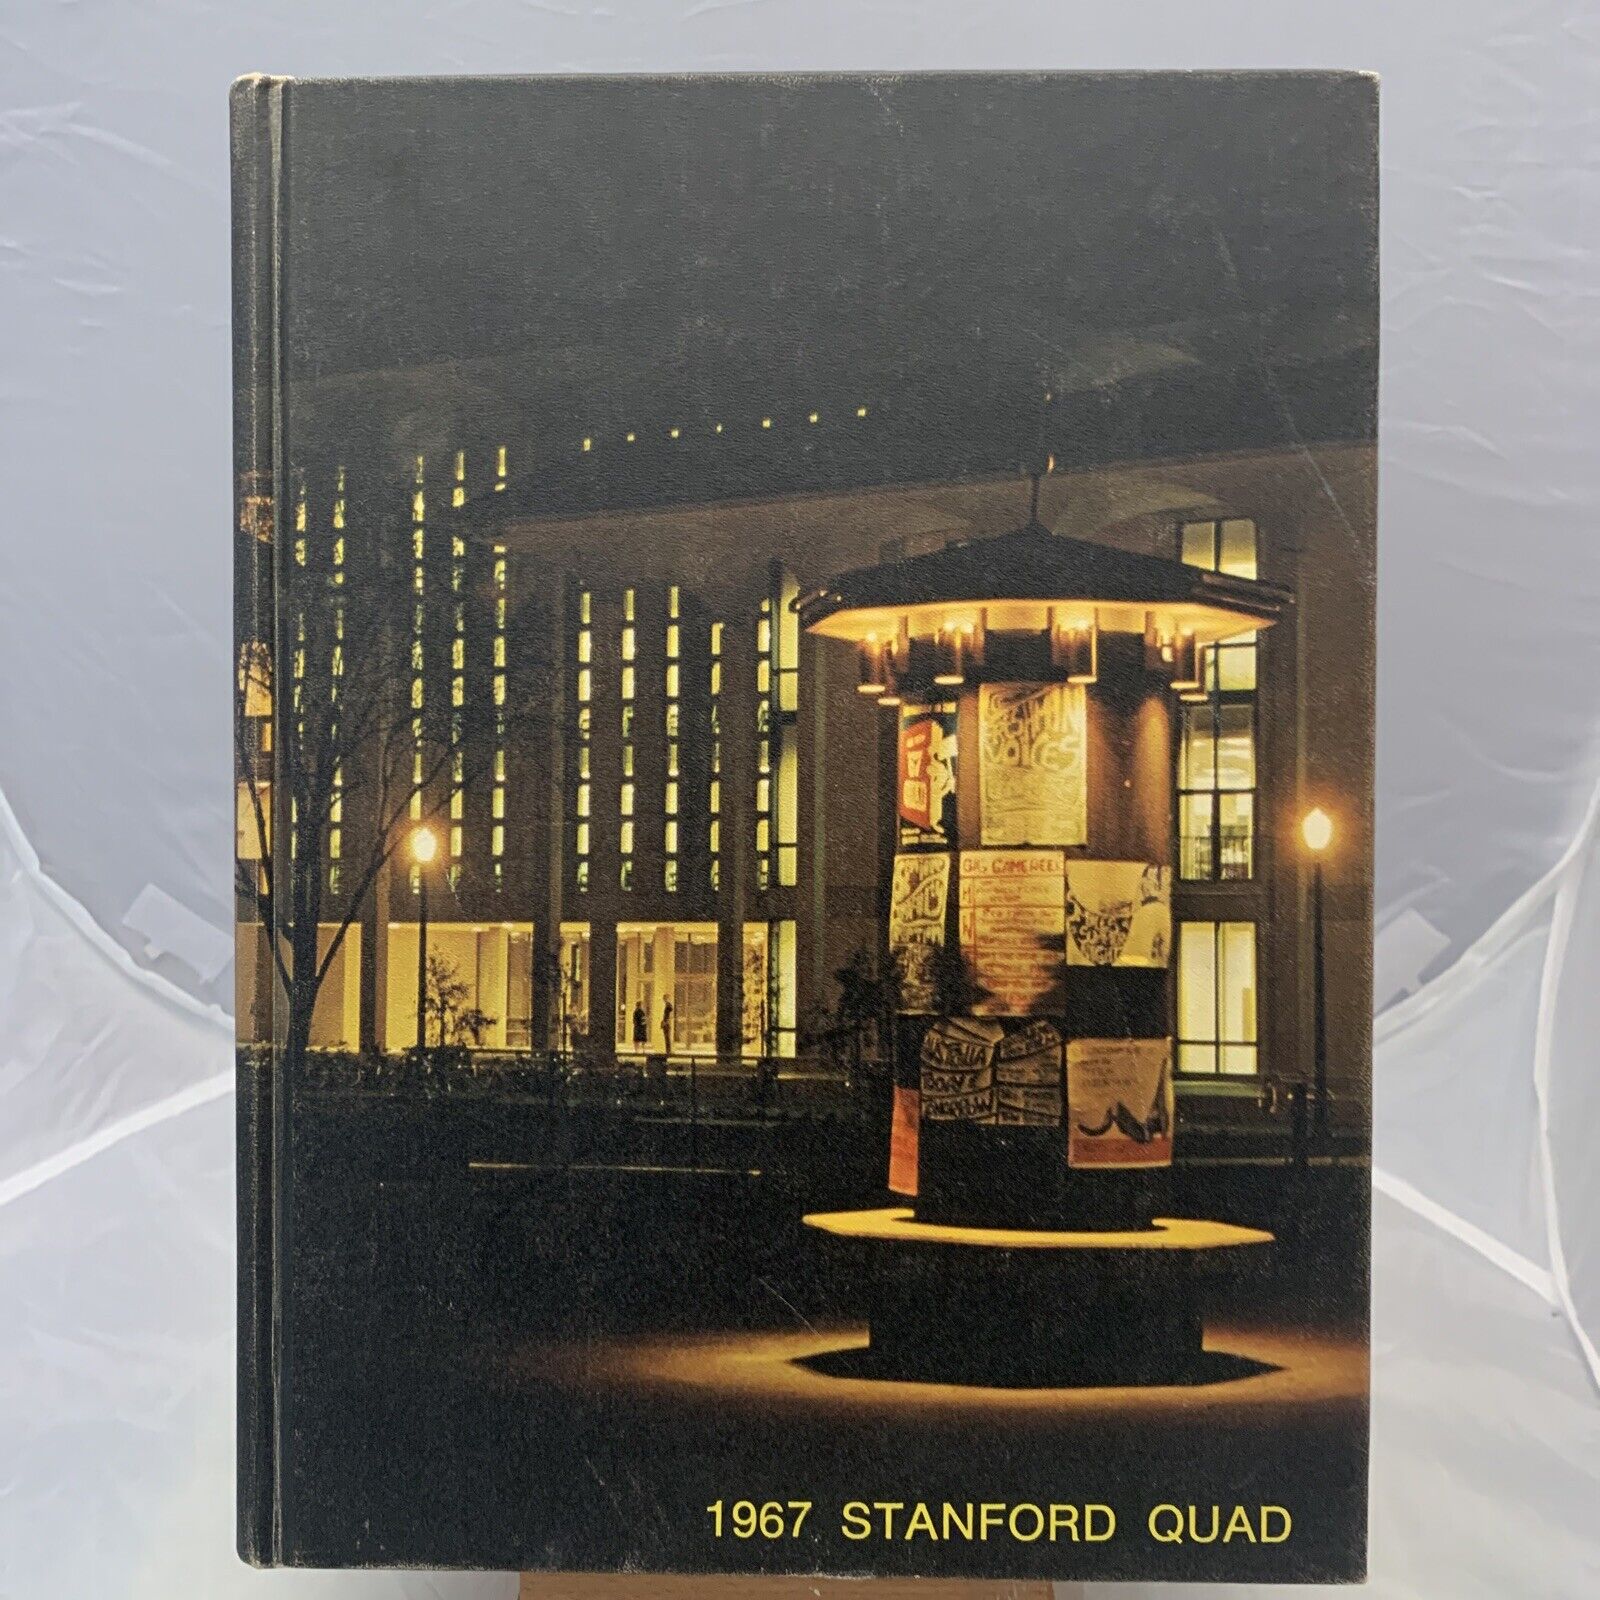 Vintage 1967 Stanford University Quad Yearbook. Volume 74. Very Good Condition